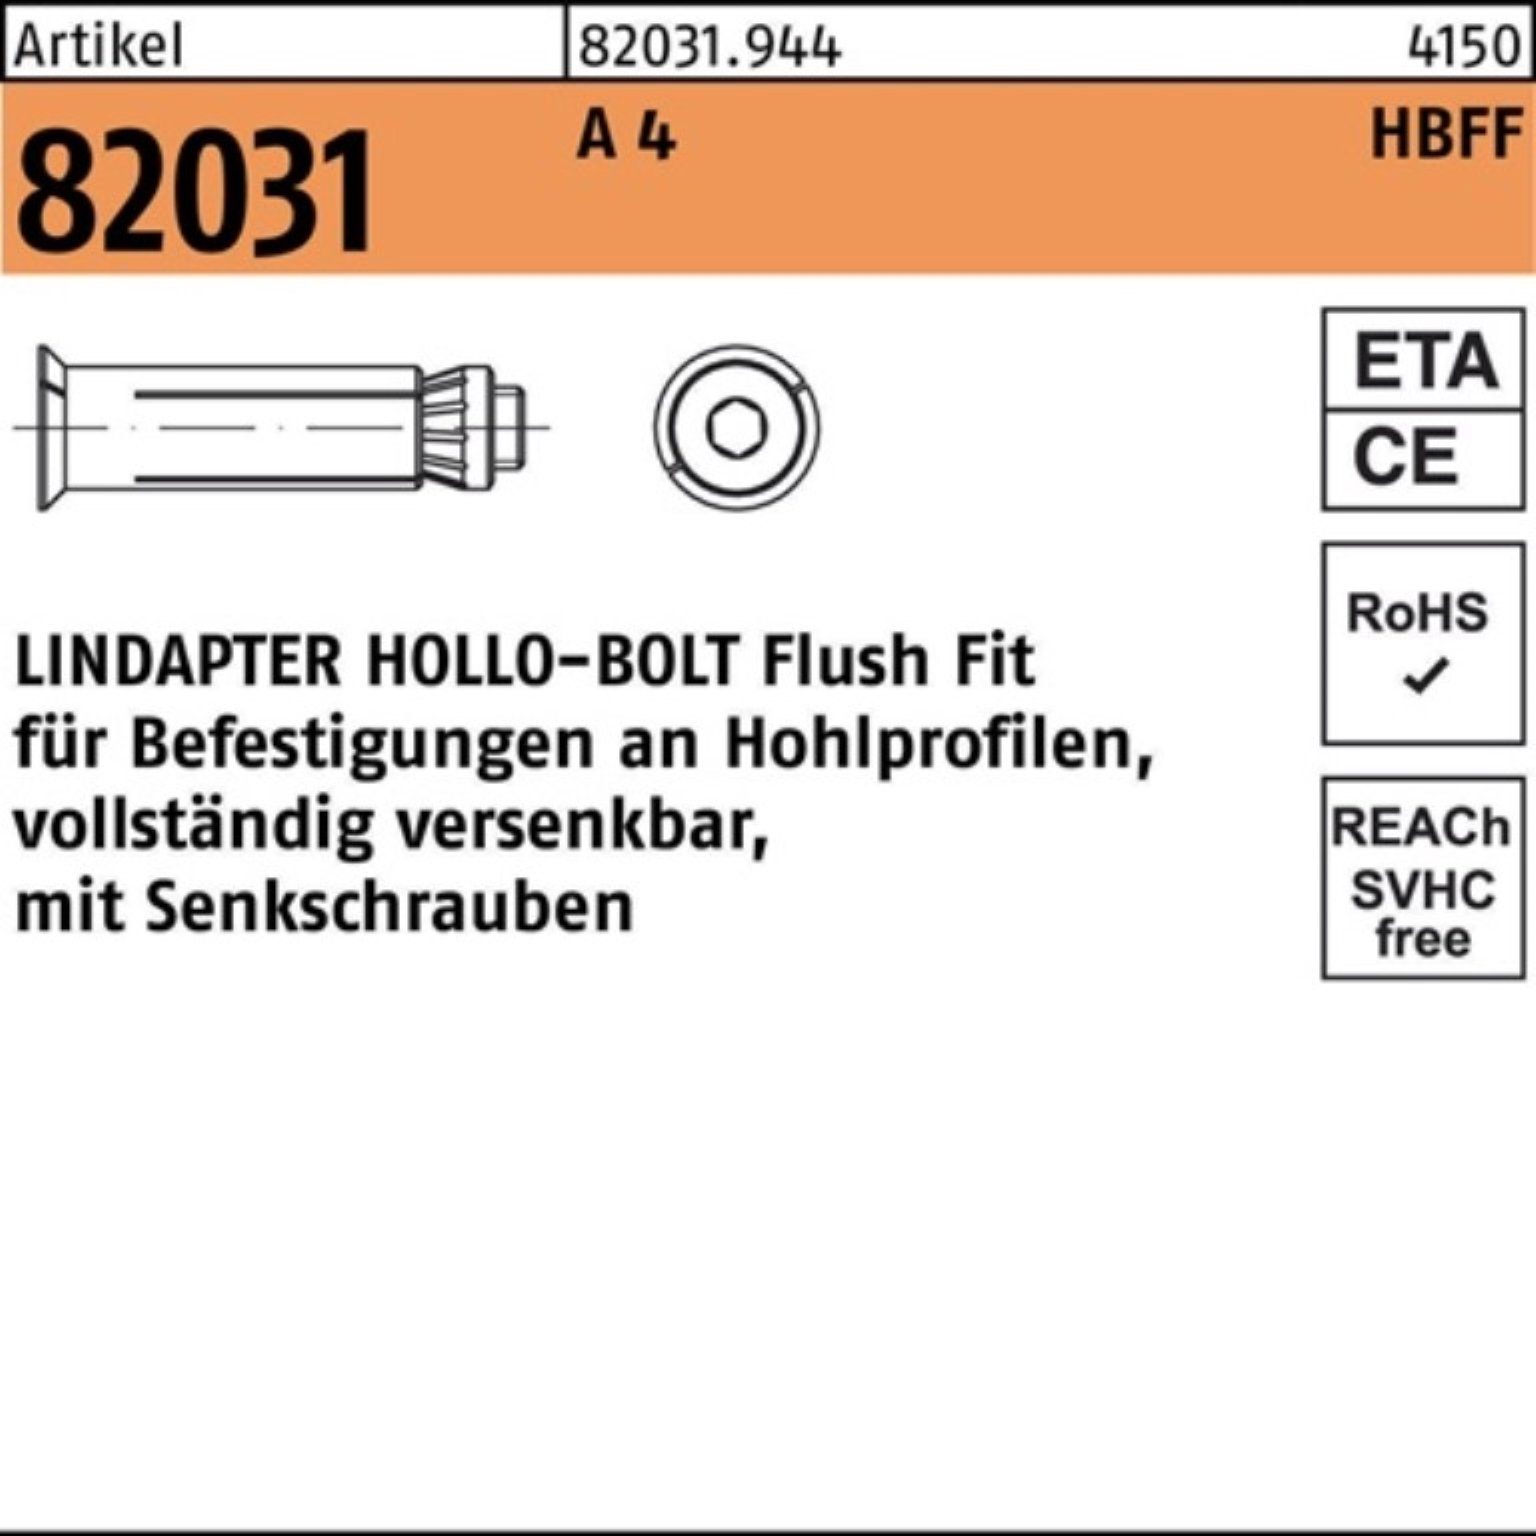 A Hohlraumdübel HBFF Stück R 82031 12-3 Lindapter Pack LIND 1 4 Hohlraumdübel 100er (100/74)